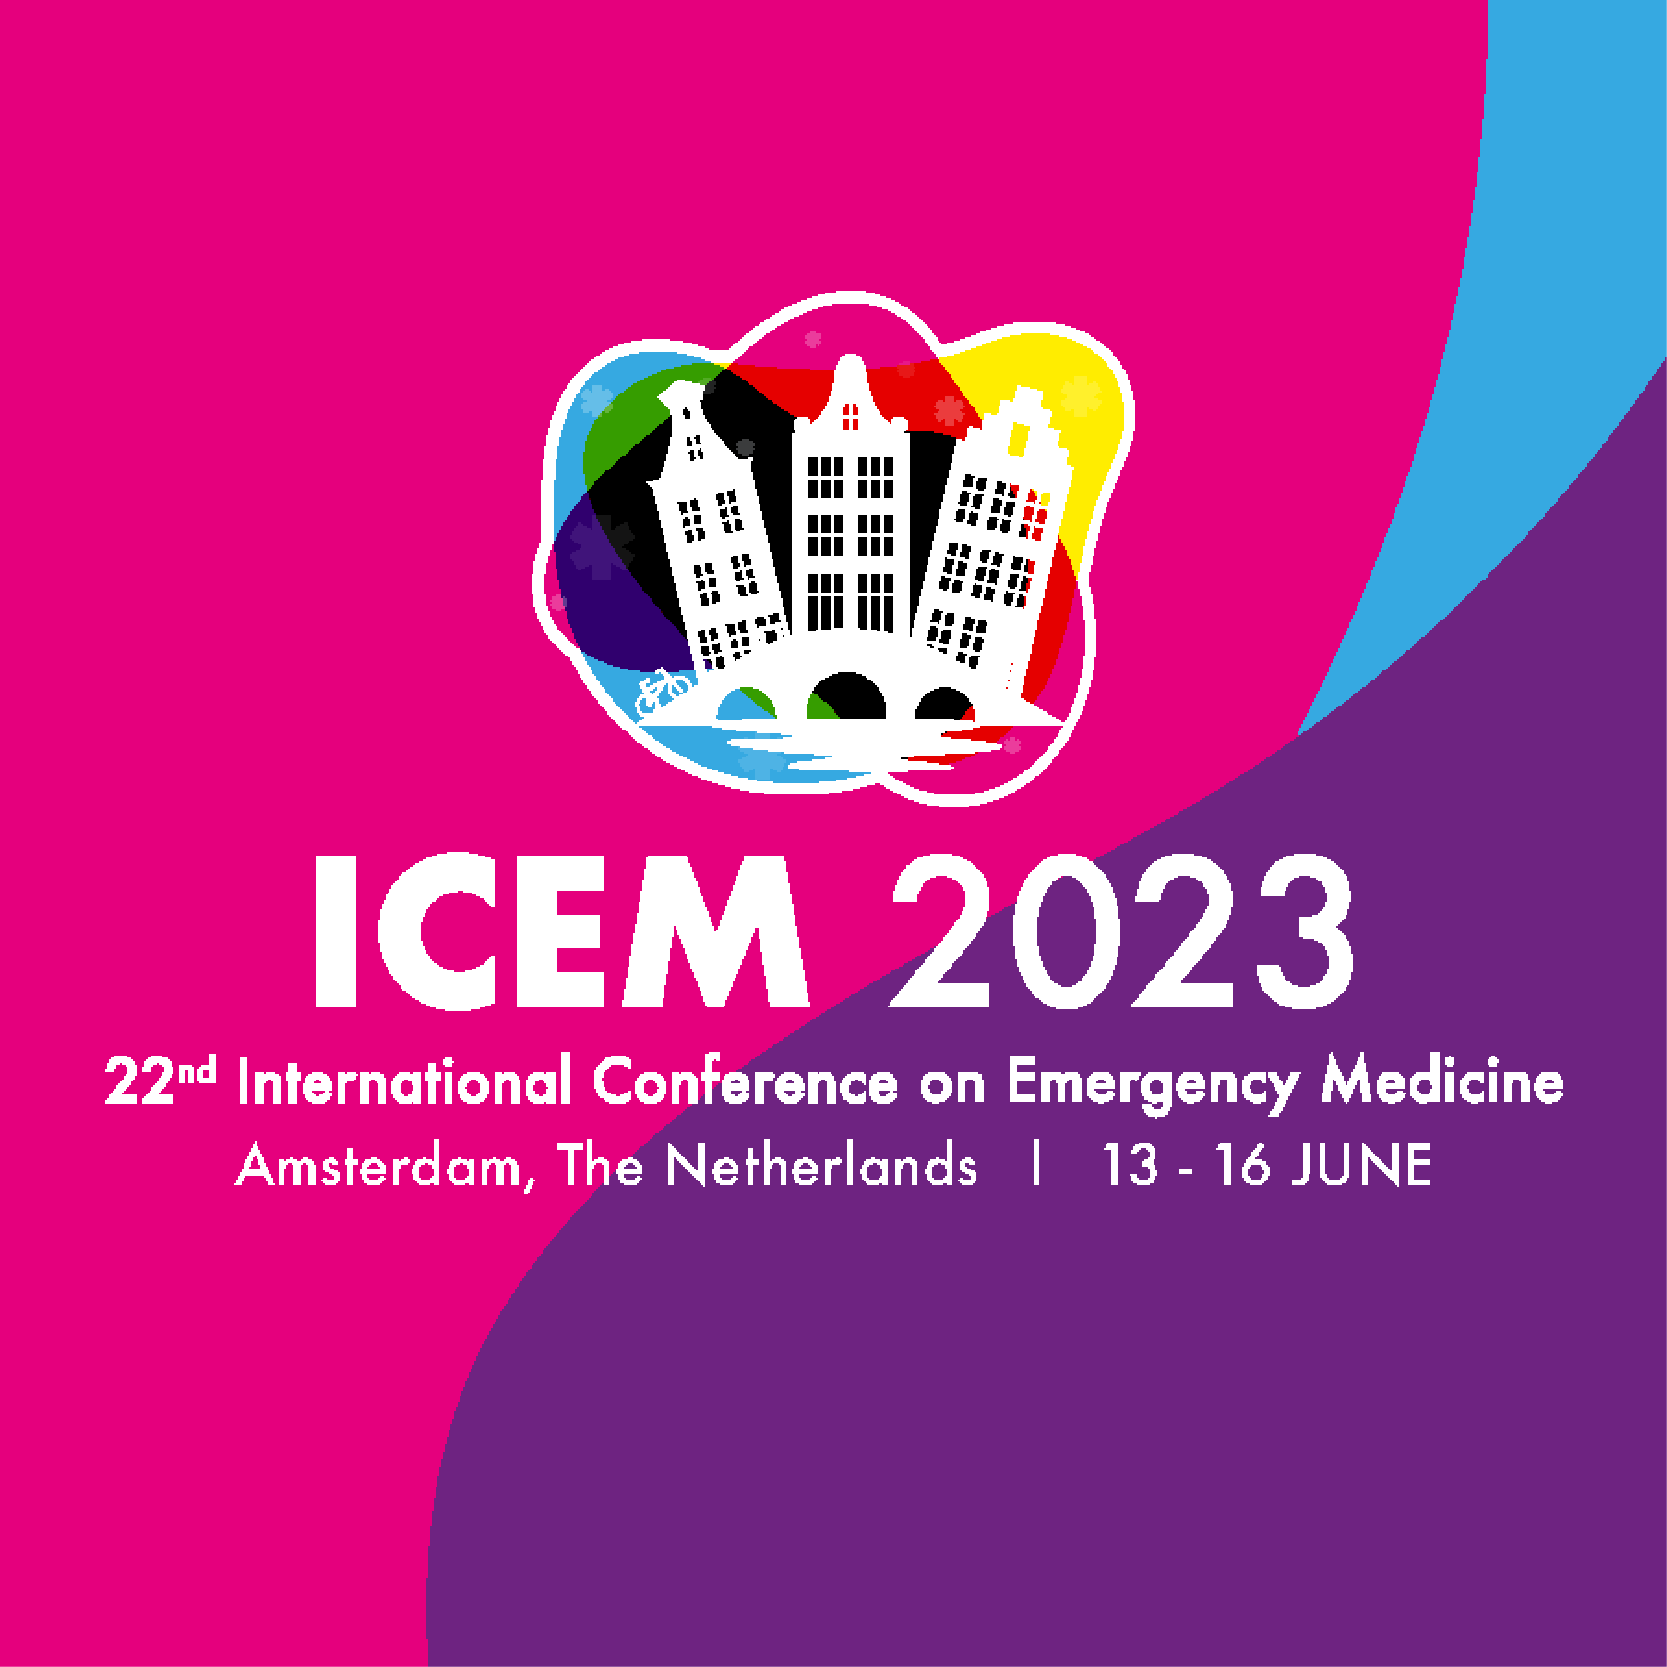 22nd International Conference on Emergency Medicine - ICEM 2023